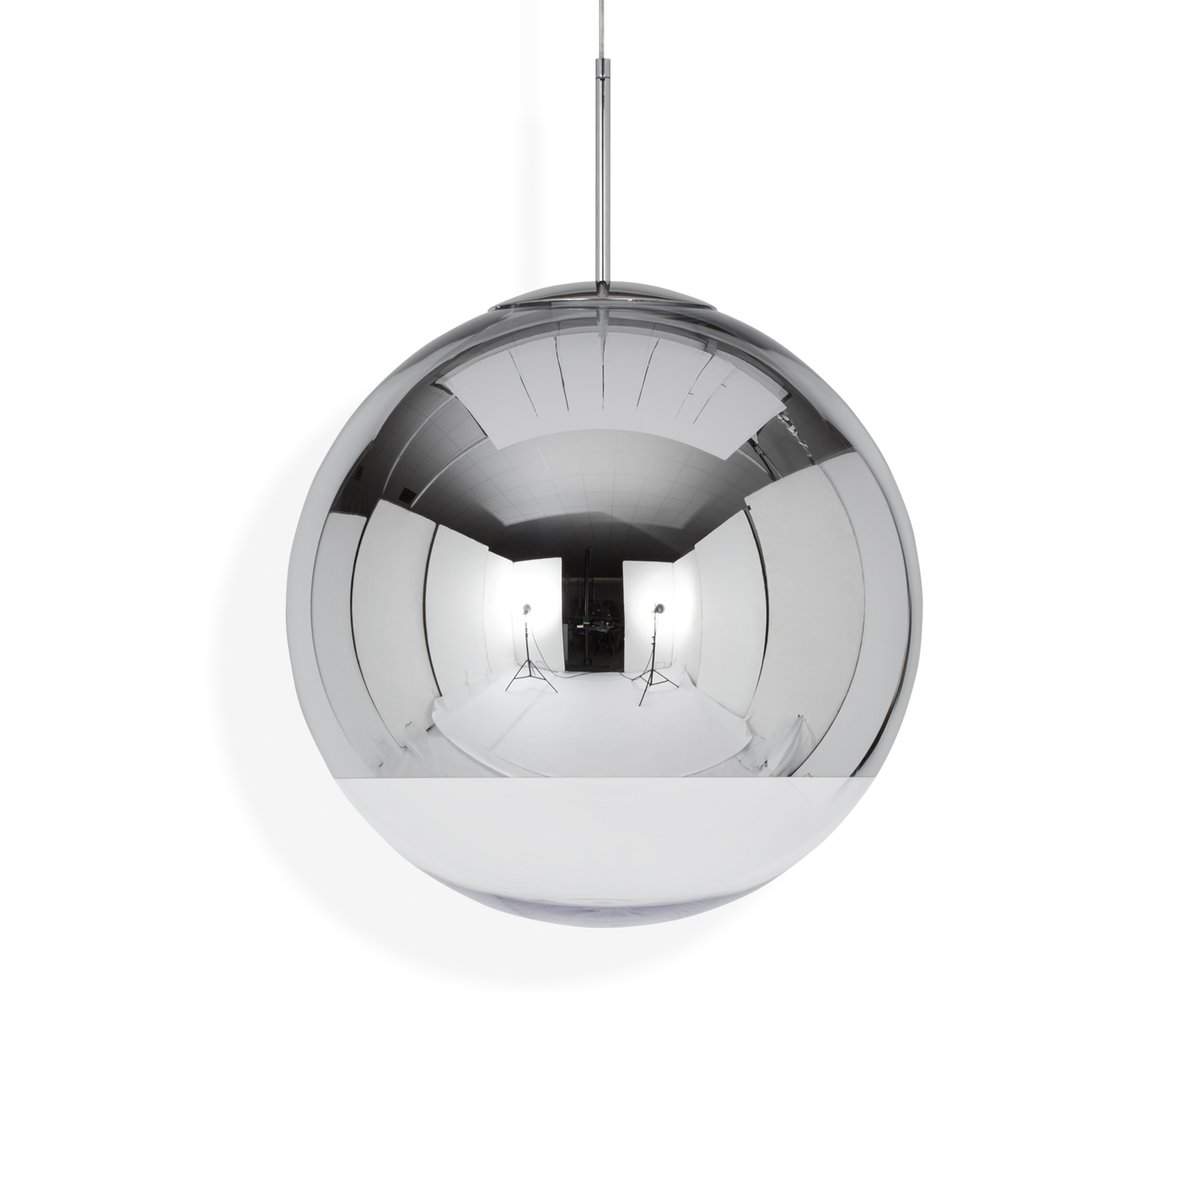 Tom Dixon Mirror Ball hanglamp LED Ø50 cm Chrome